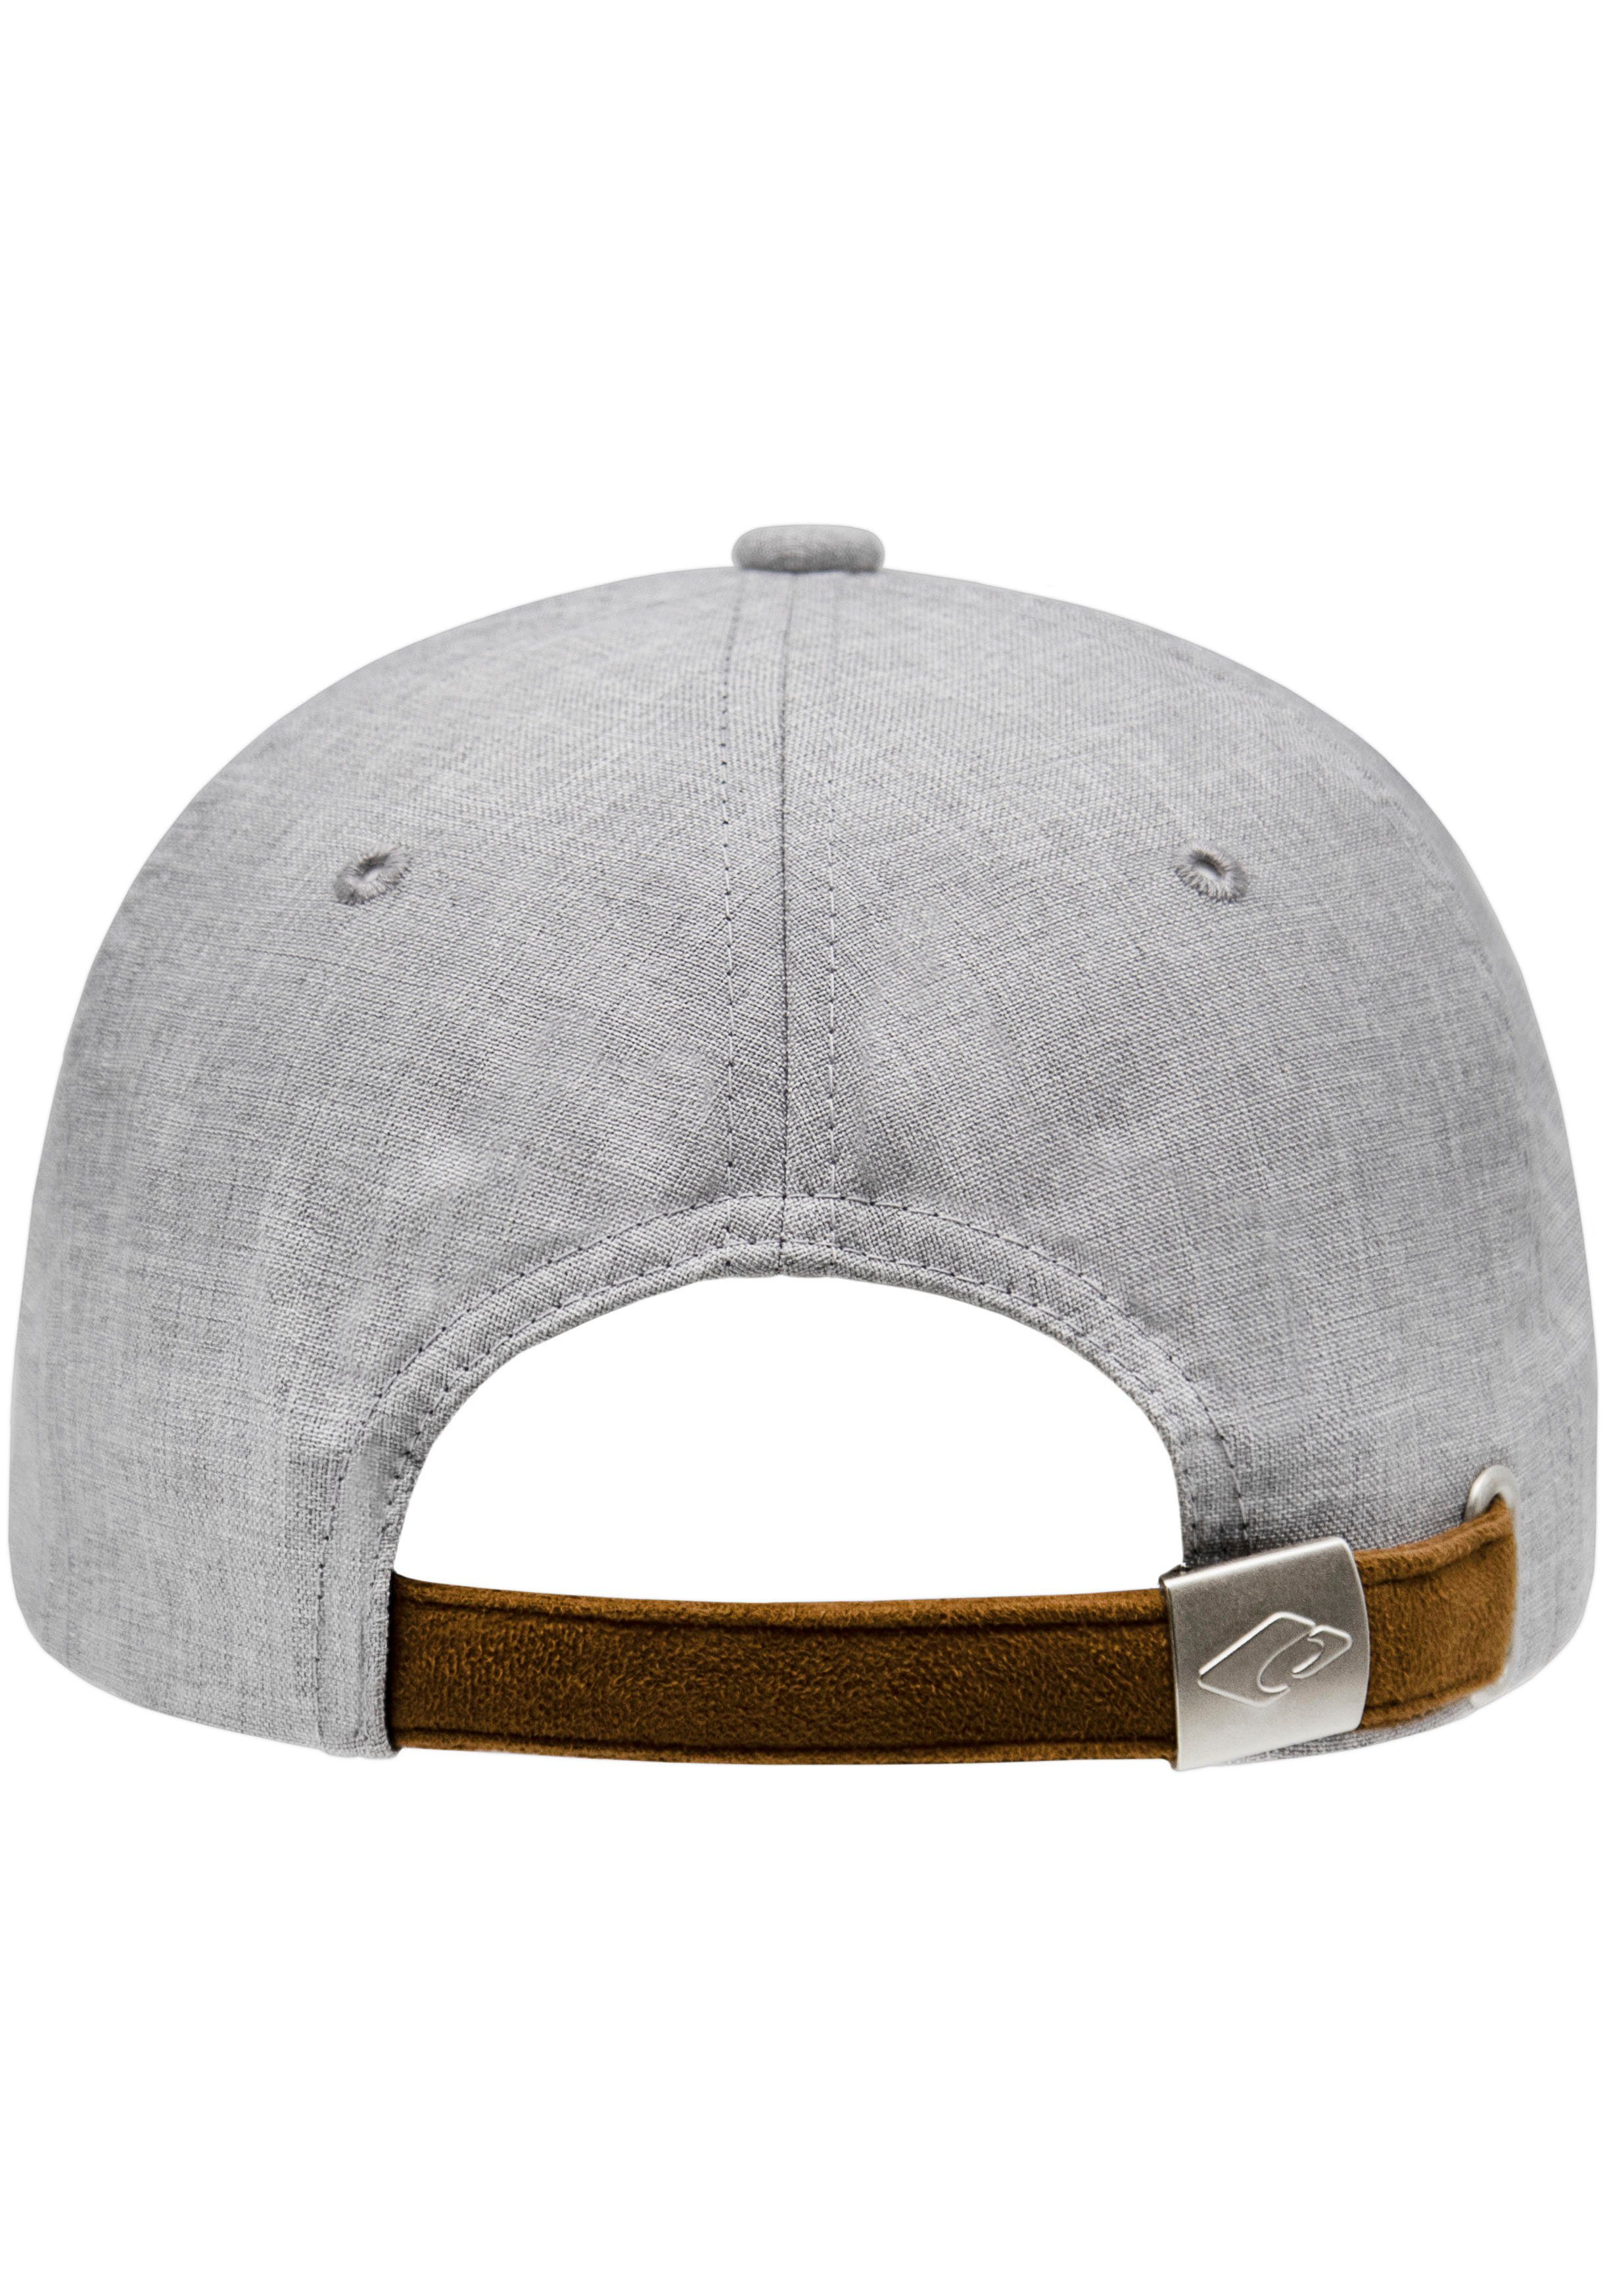 Optik, Amadora in Baseball chillouts Hat Cap Size, One verstellbar hellgrau melierter